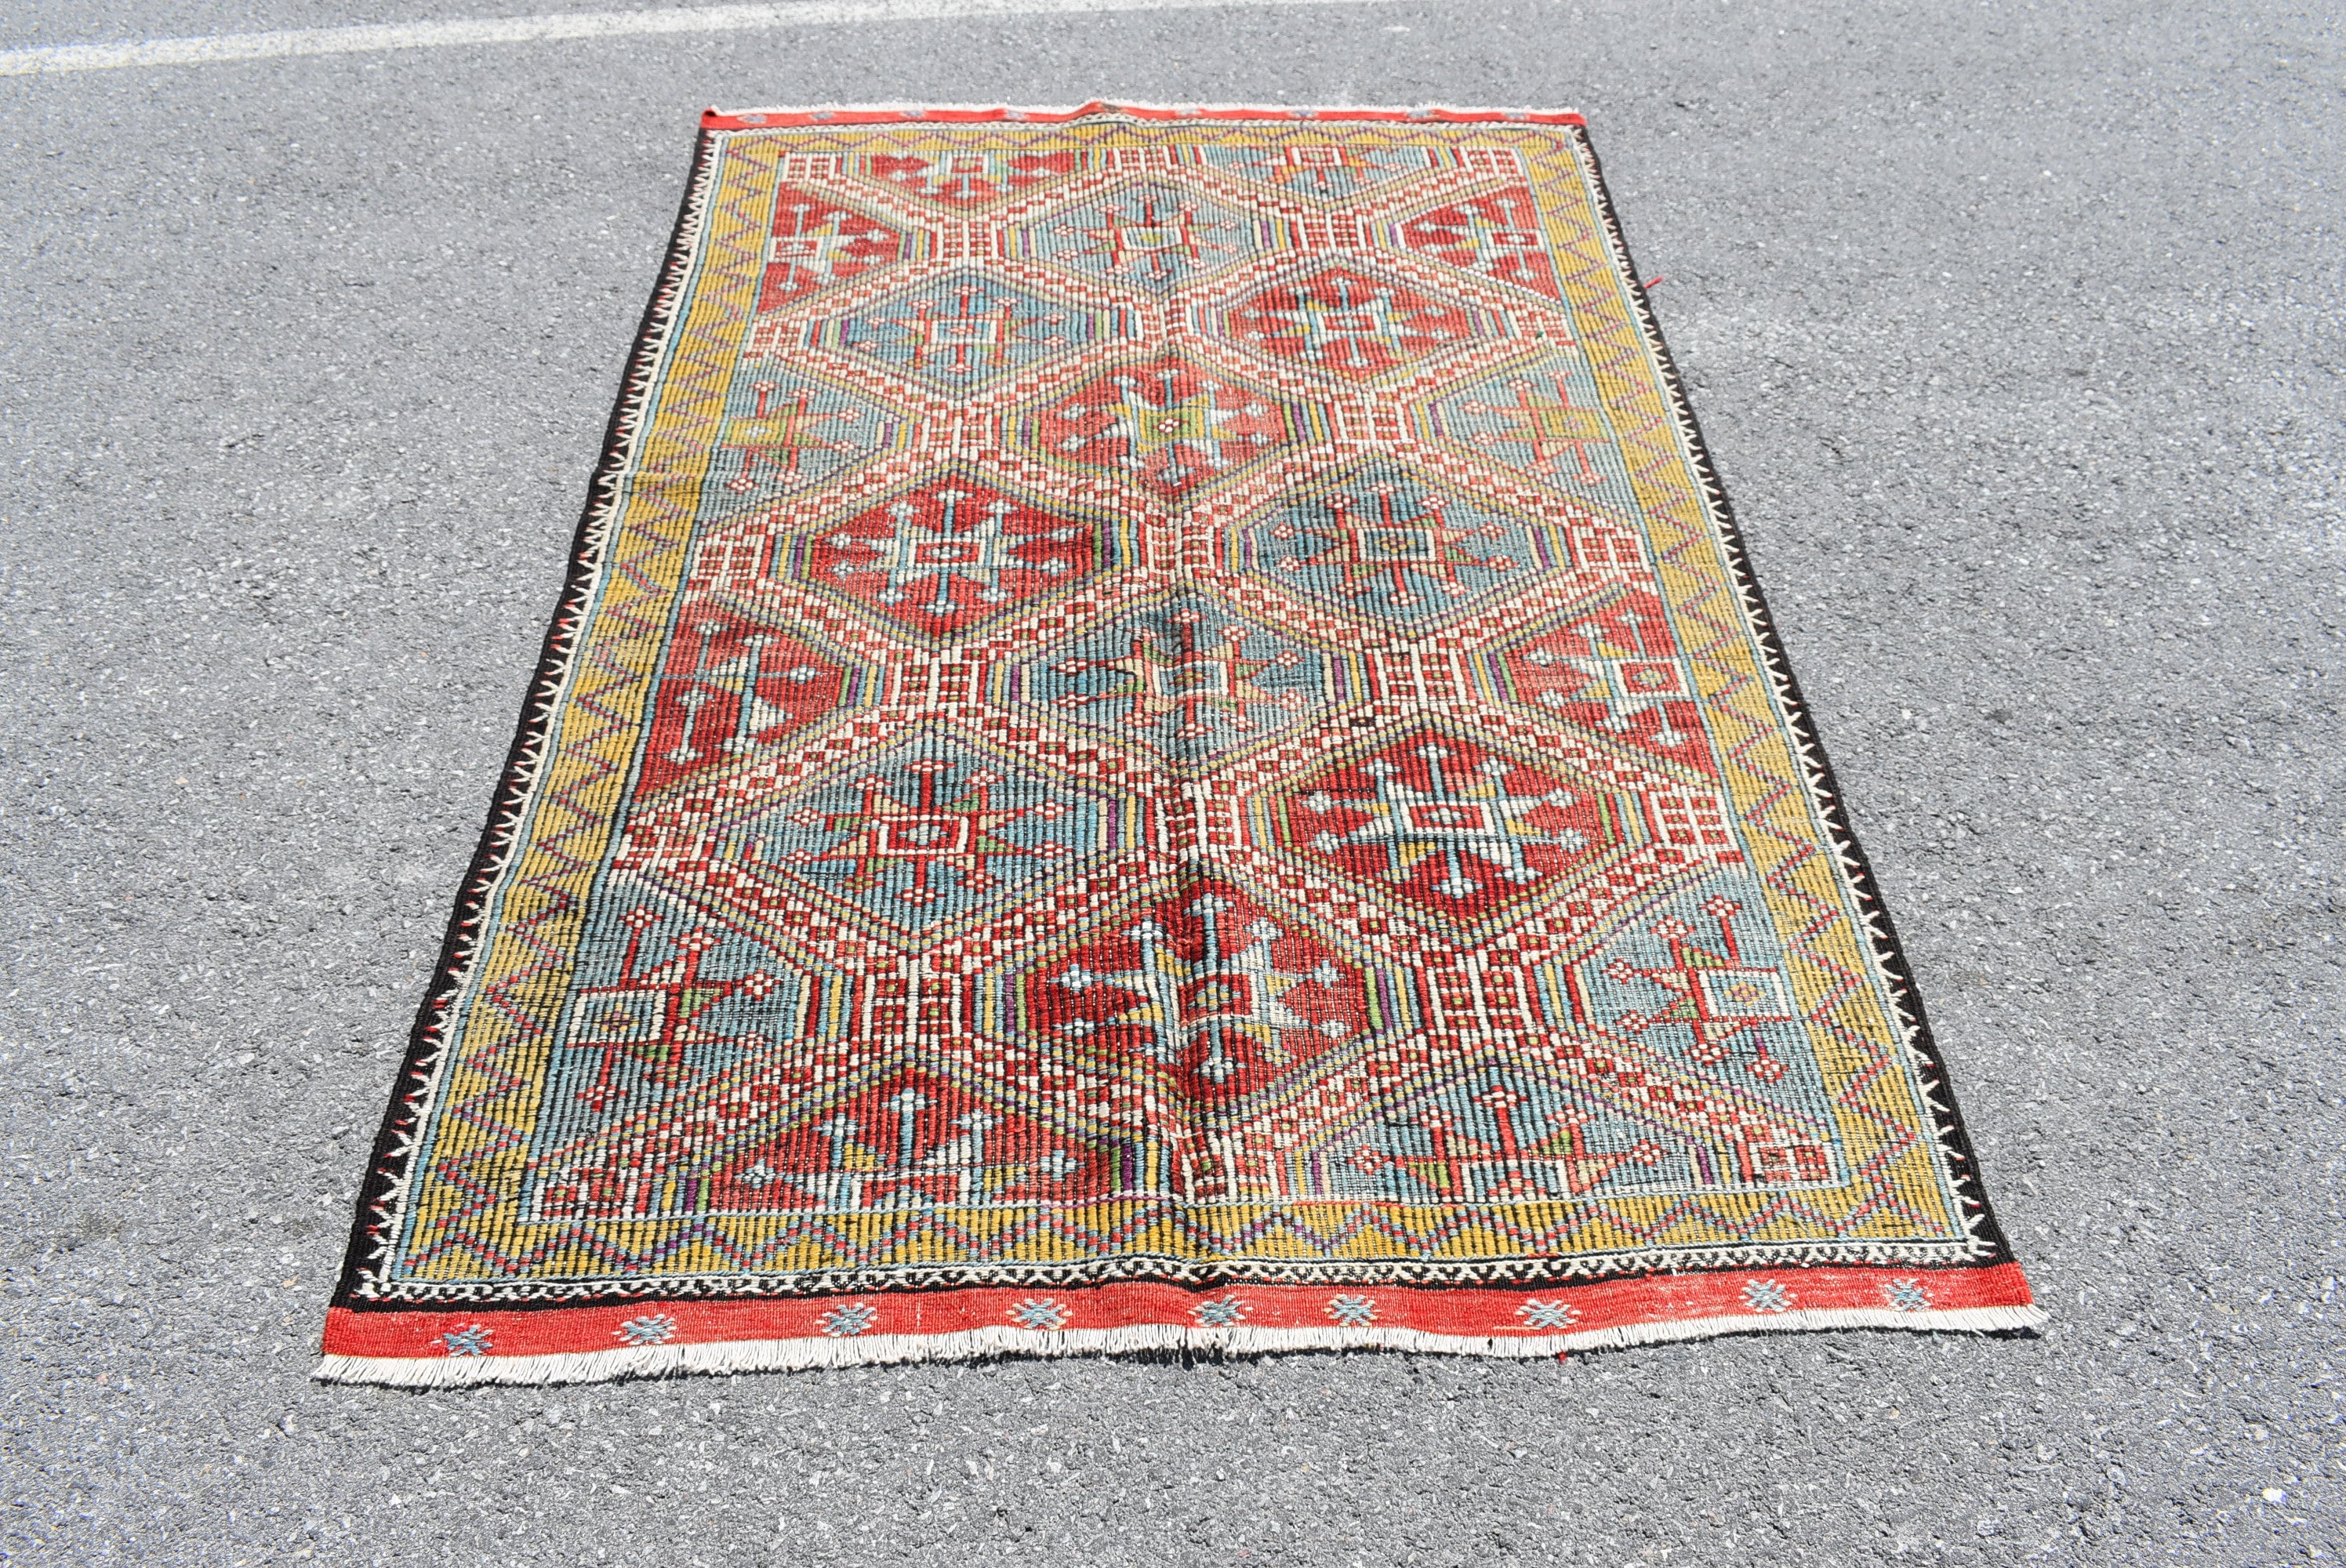 4.6 x 6.6 Feet TV2531 Kitchen rug Bohemian rug Handmade rug Turkish area rug Natural wool rug Blue and red kilim rug Home decor